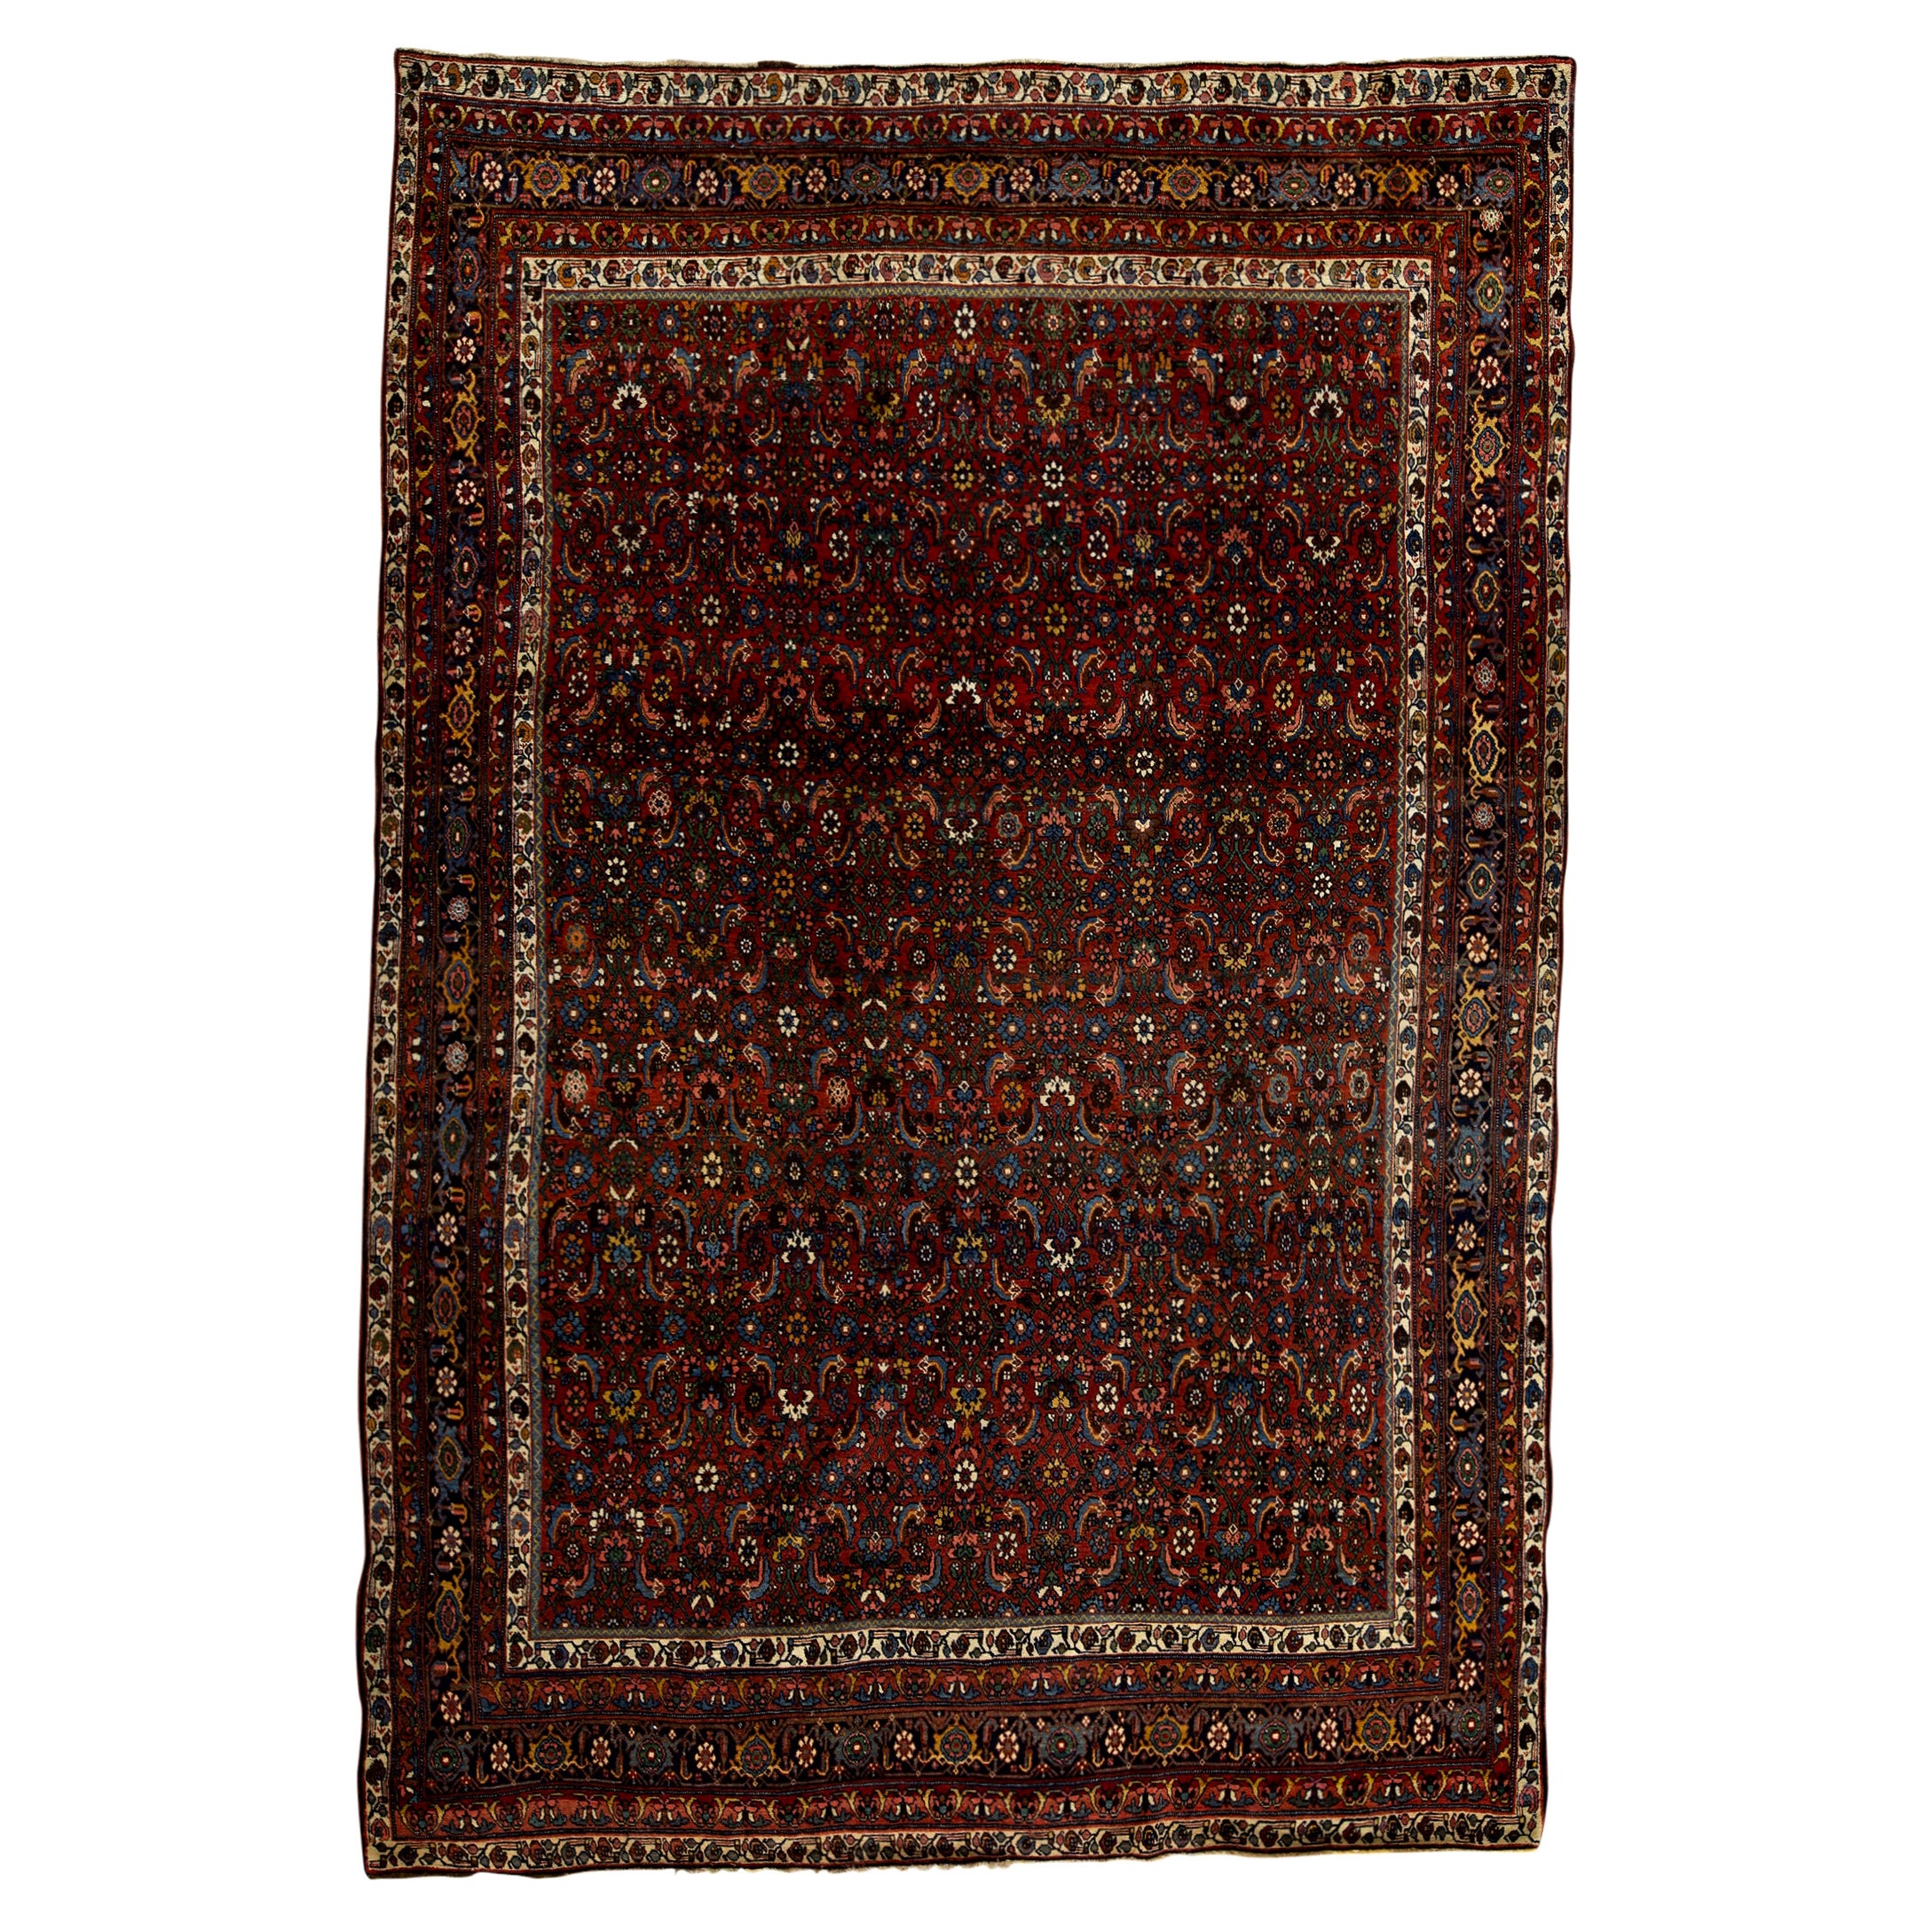 Traditional Handwoven Luxury Semi Antique Persian Wool Multi